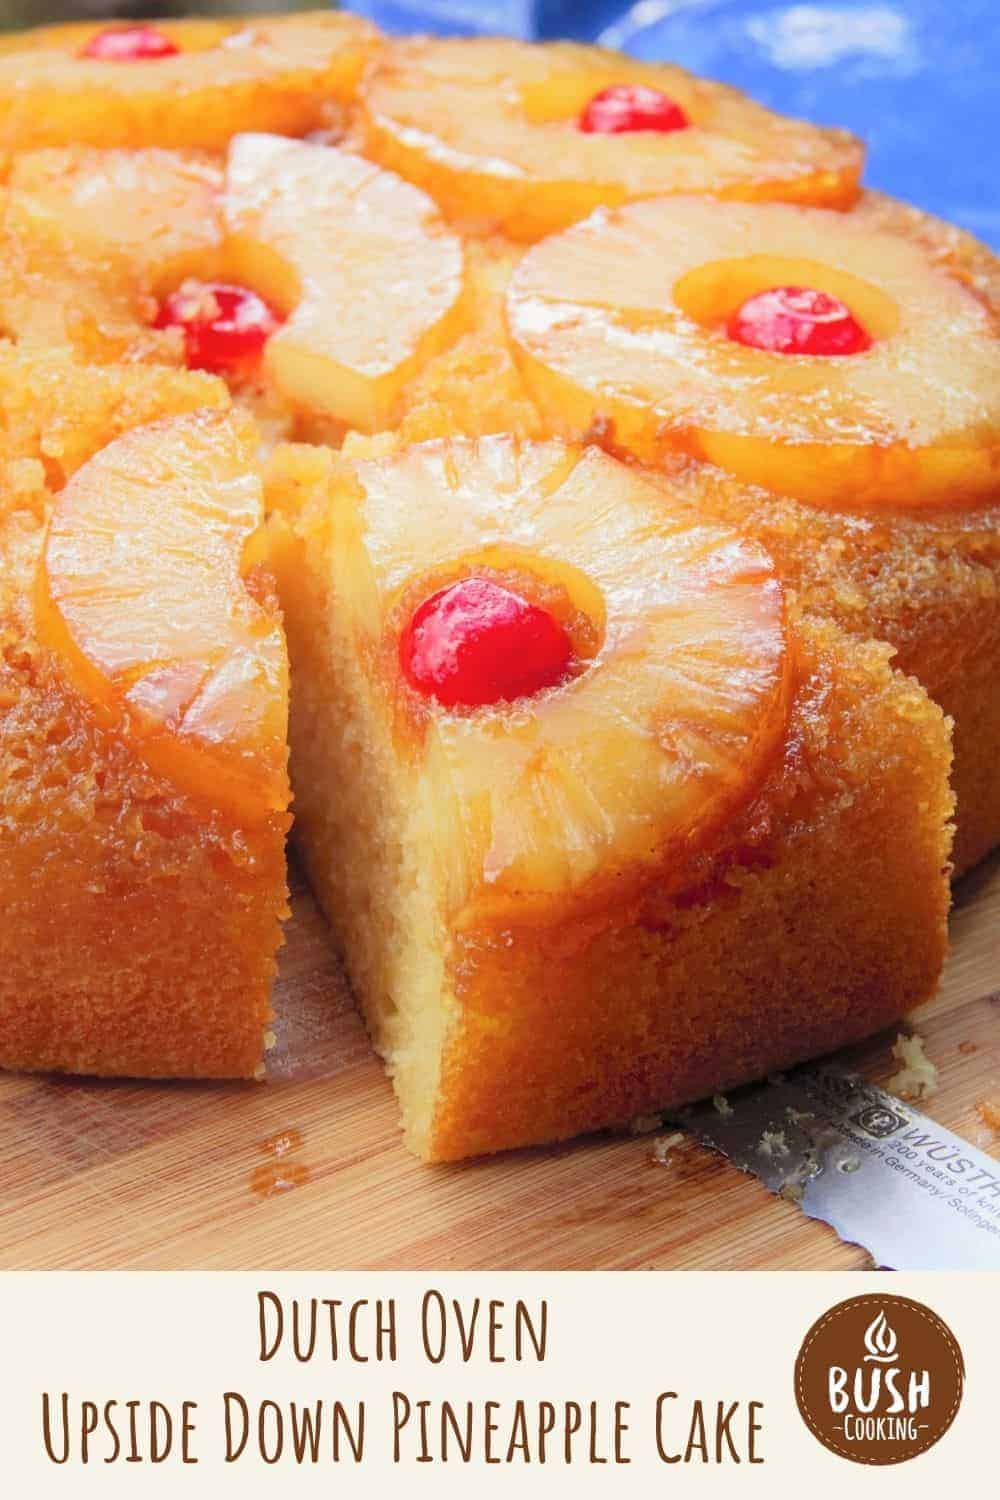 https://bushcooking.com/wp-content/uploads/2021/03/Dutch-Oven-Upside-Down-Pineapple-Cake-7.jpg